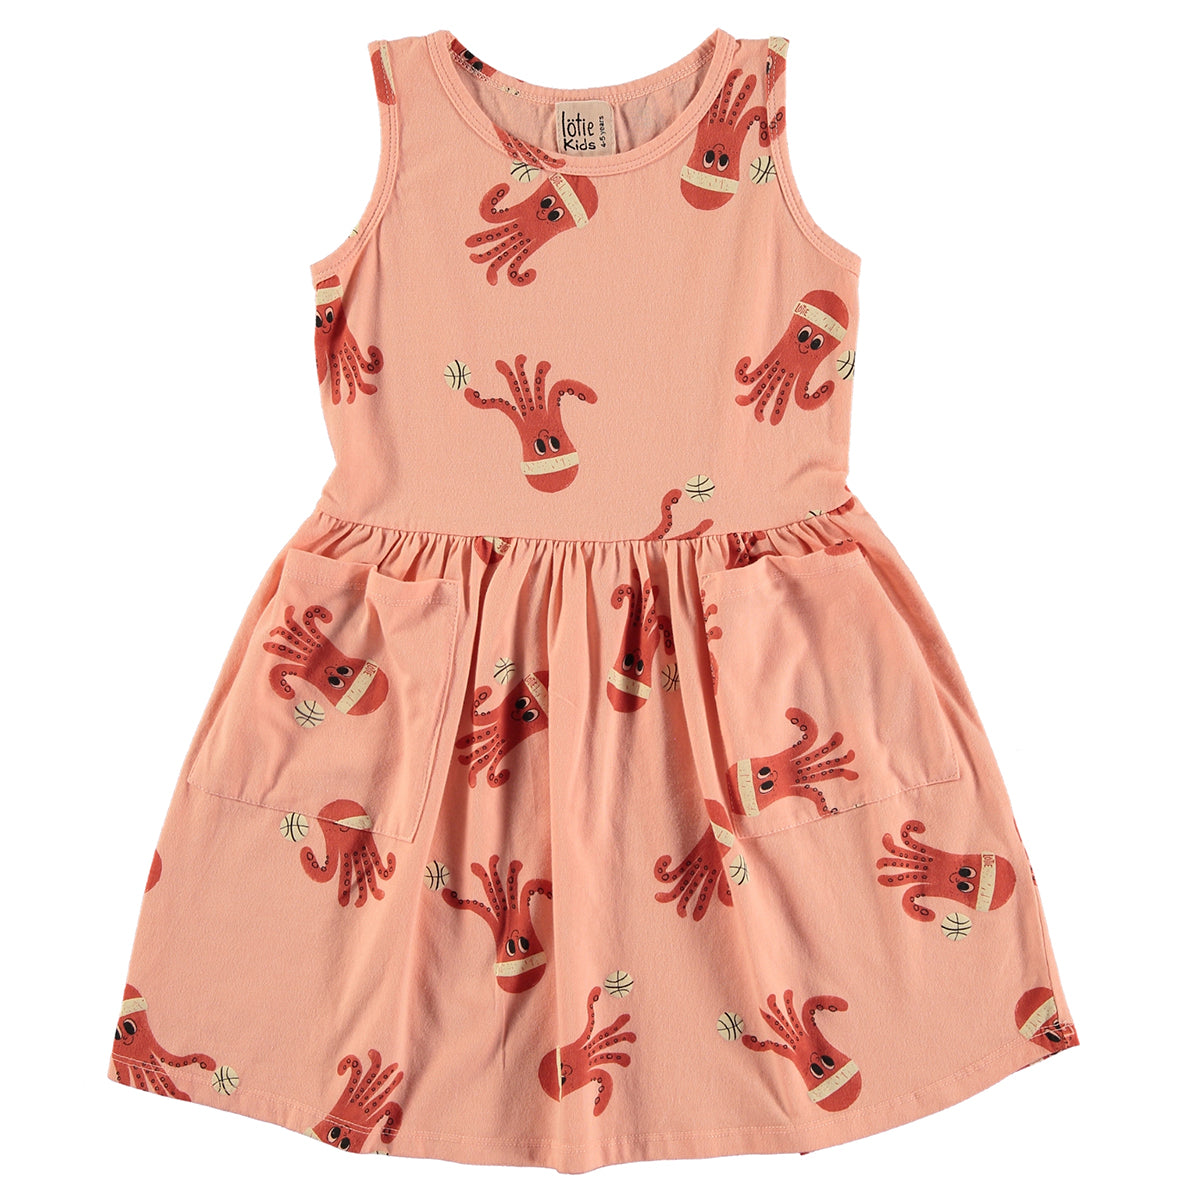 Lotie Kids - sleeveless dress - octopuses - salmon rose